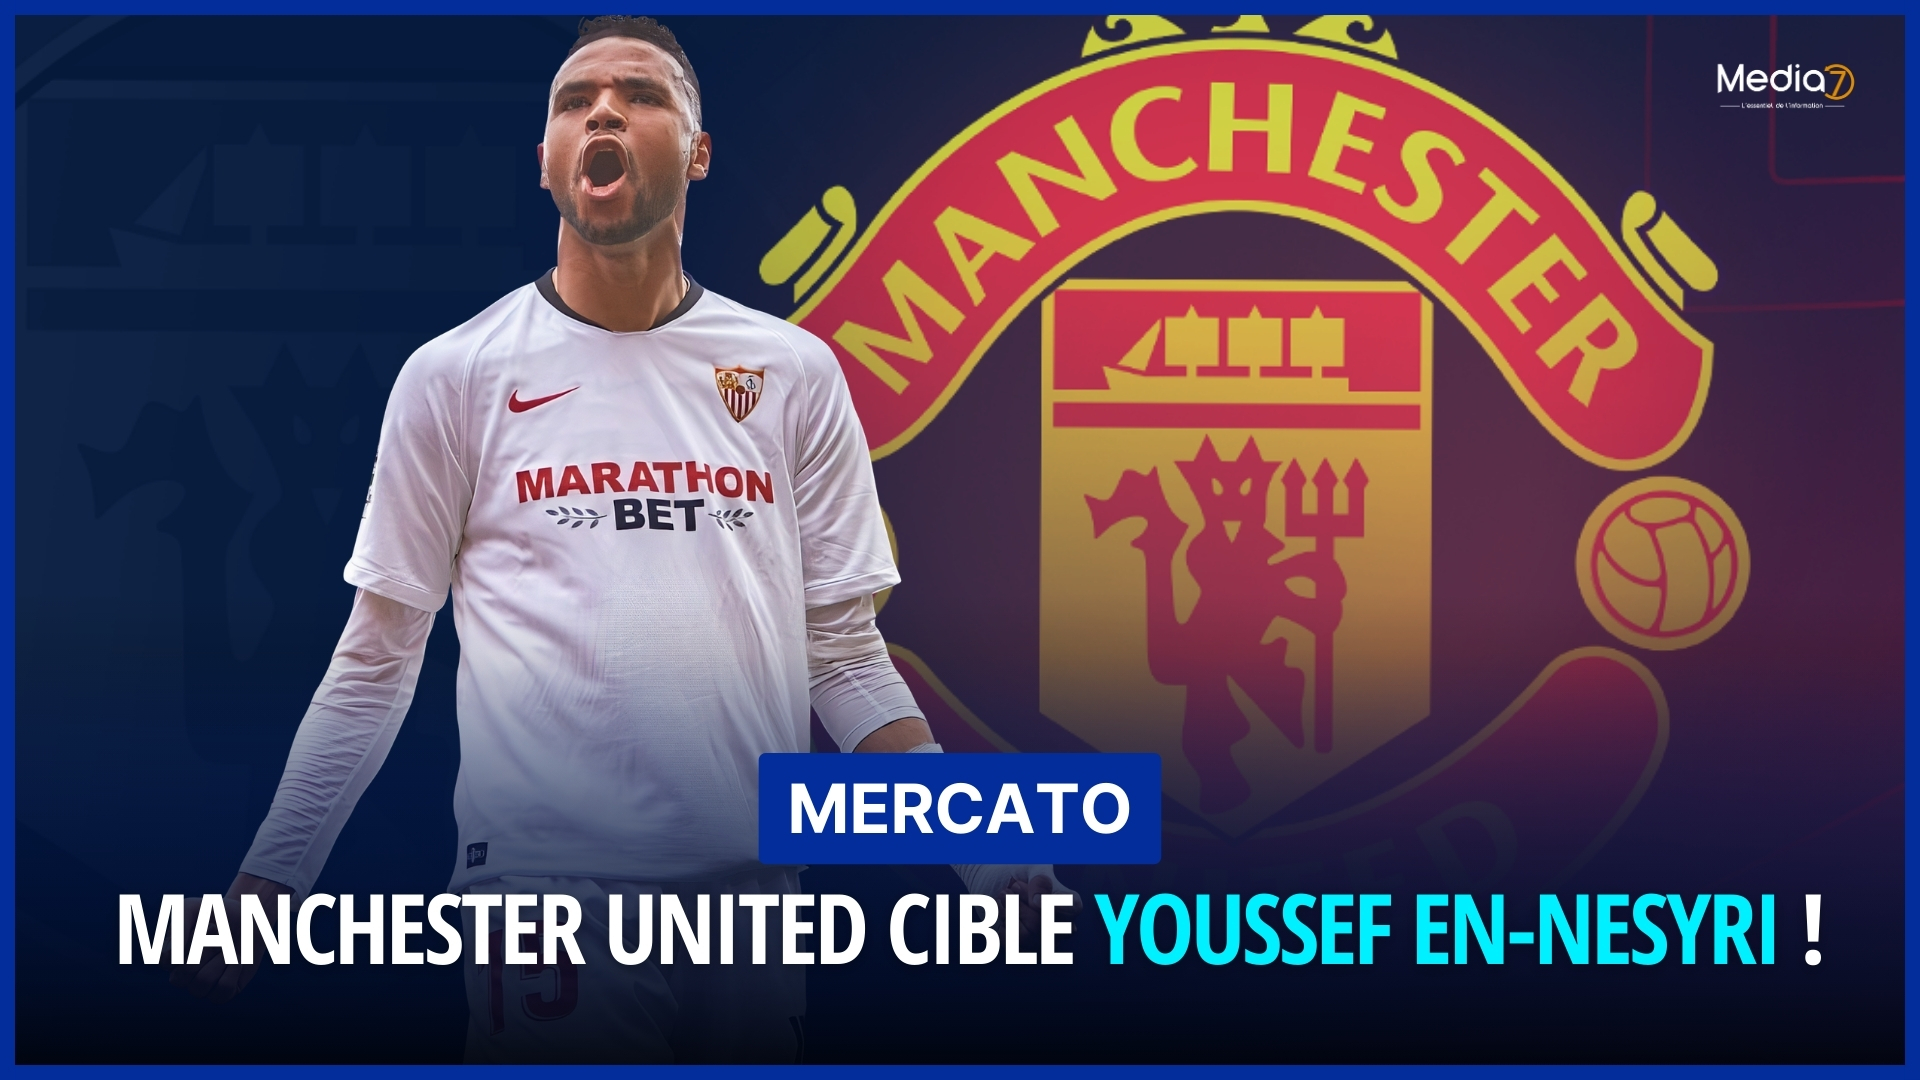 Manchester United Cible Youssef En-Nesyri !